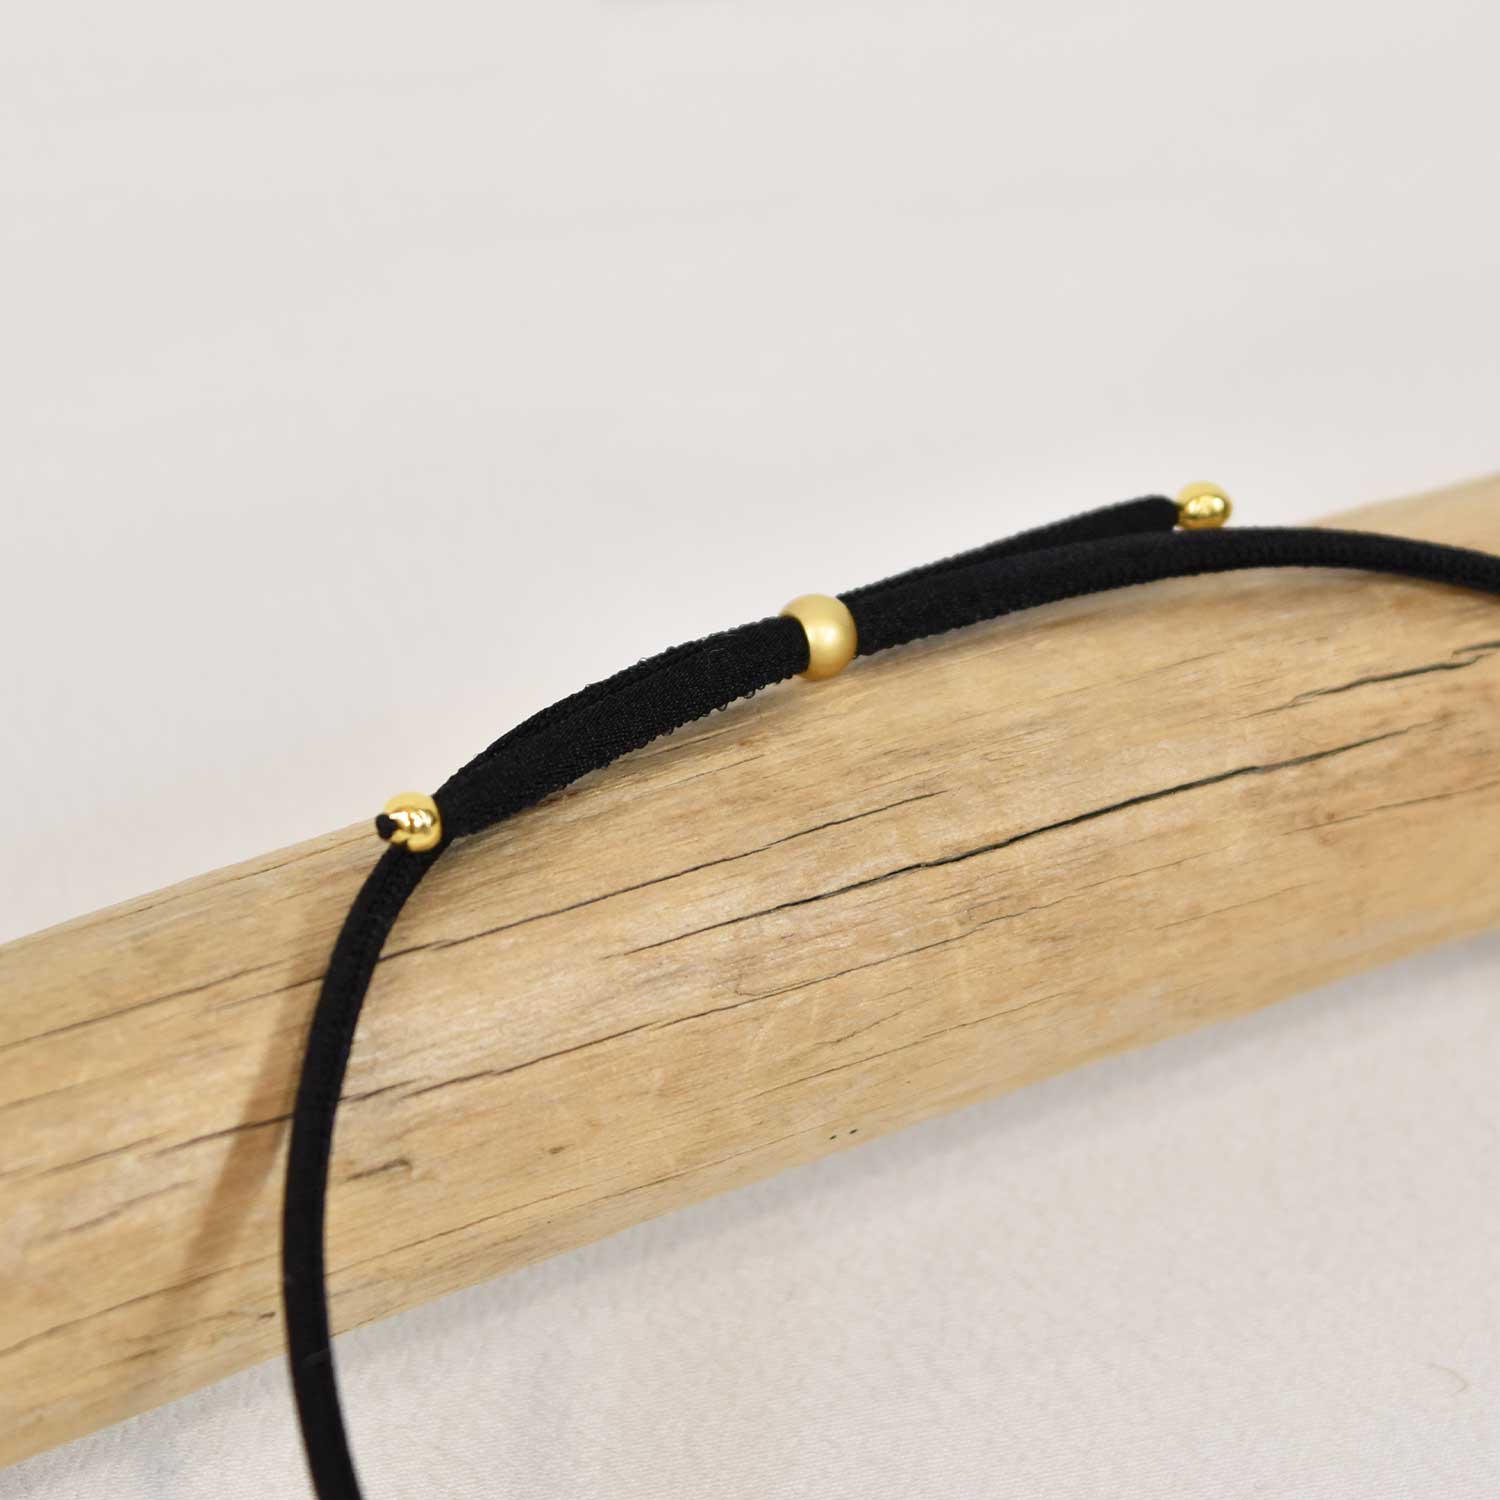 Black golden elastic necklace